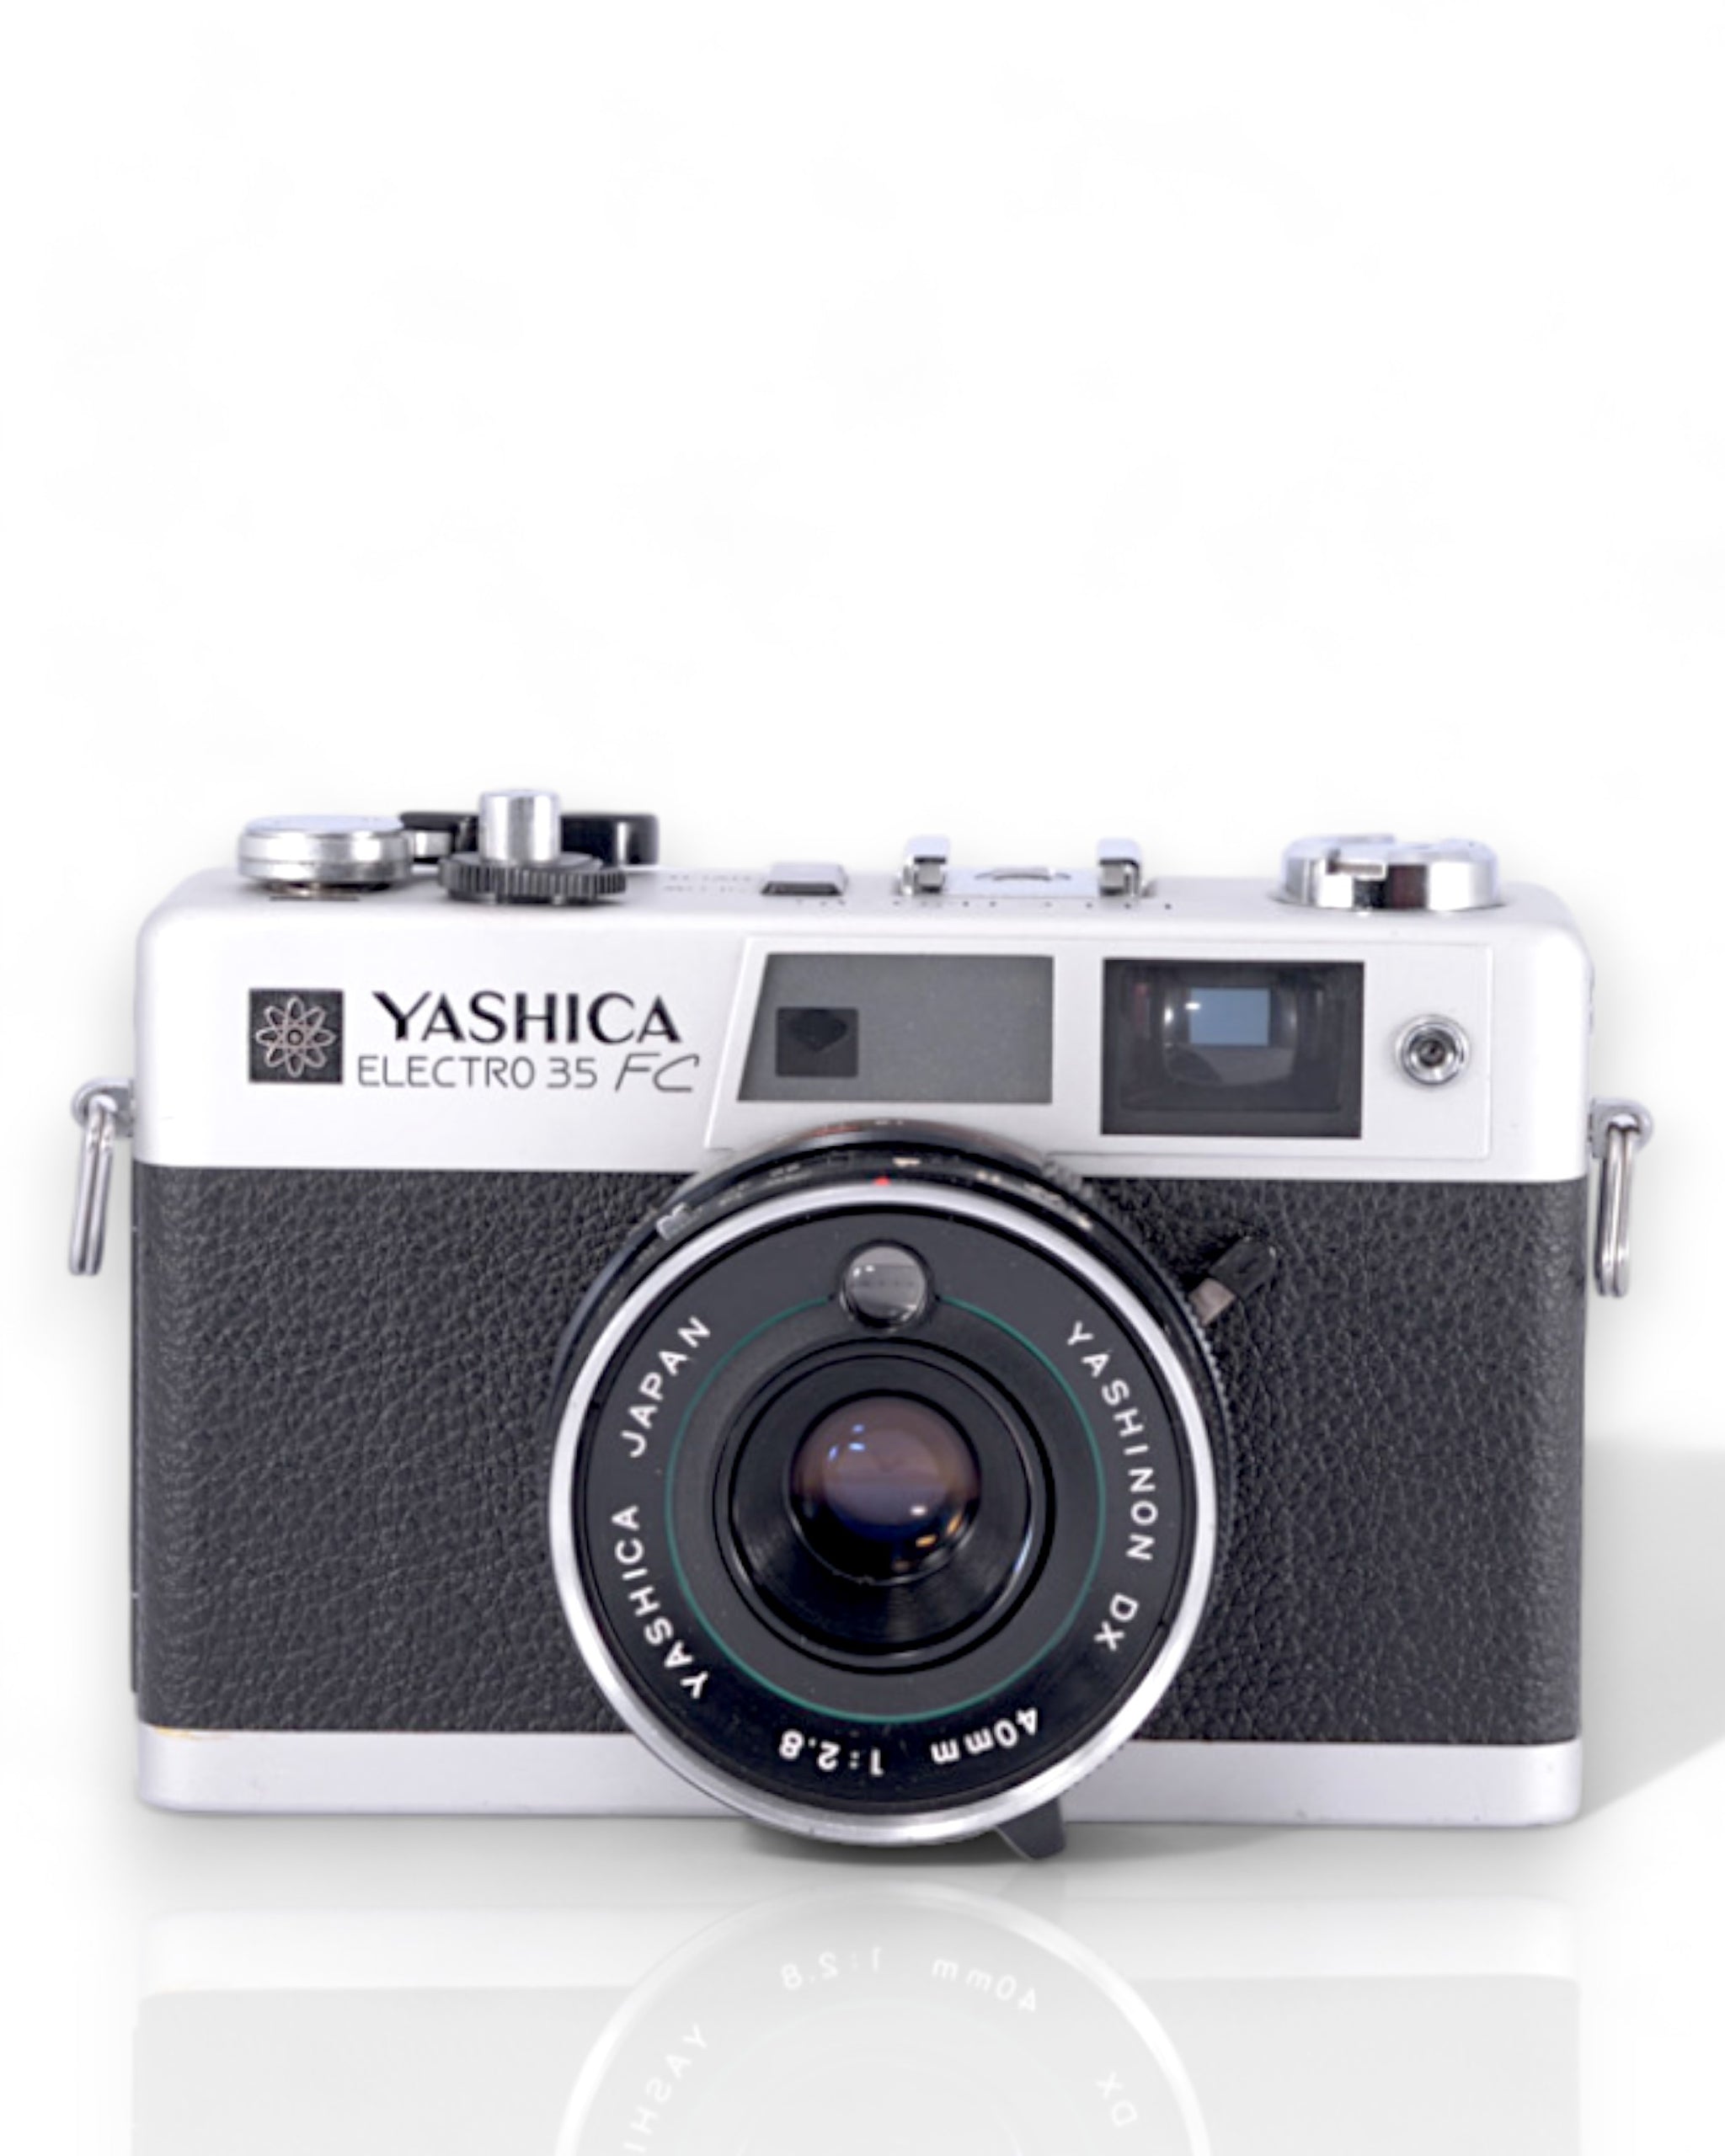 YASHICA ELECTRO 35 FC - フィルムカメラ